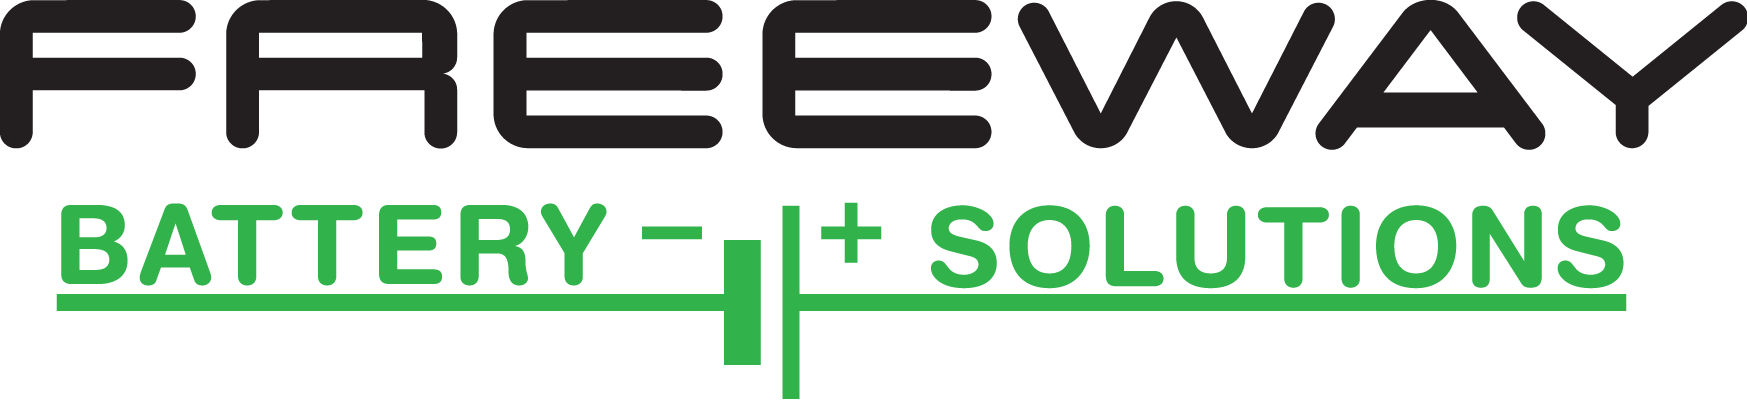 Freeway Logo - Freeway Battery Solutions